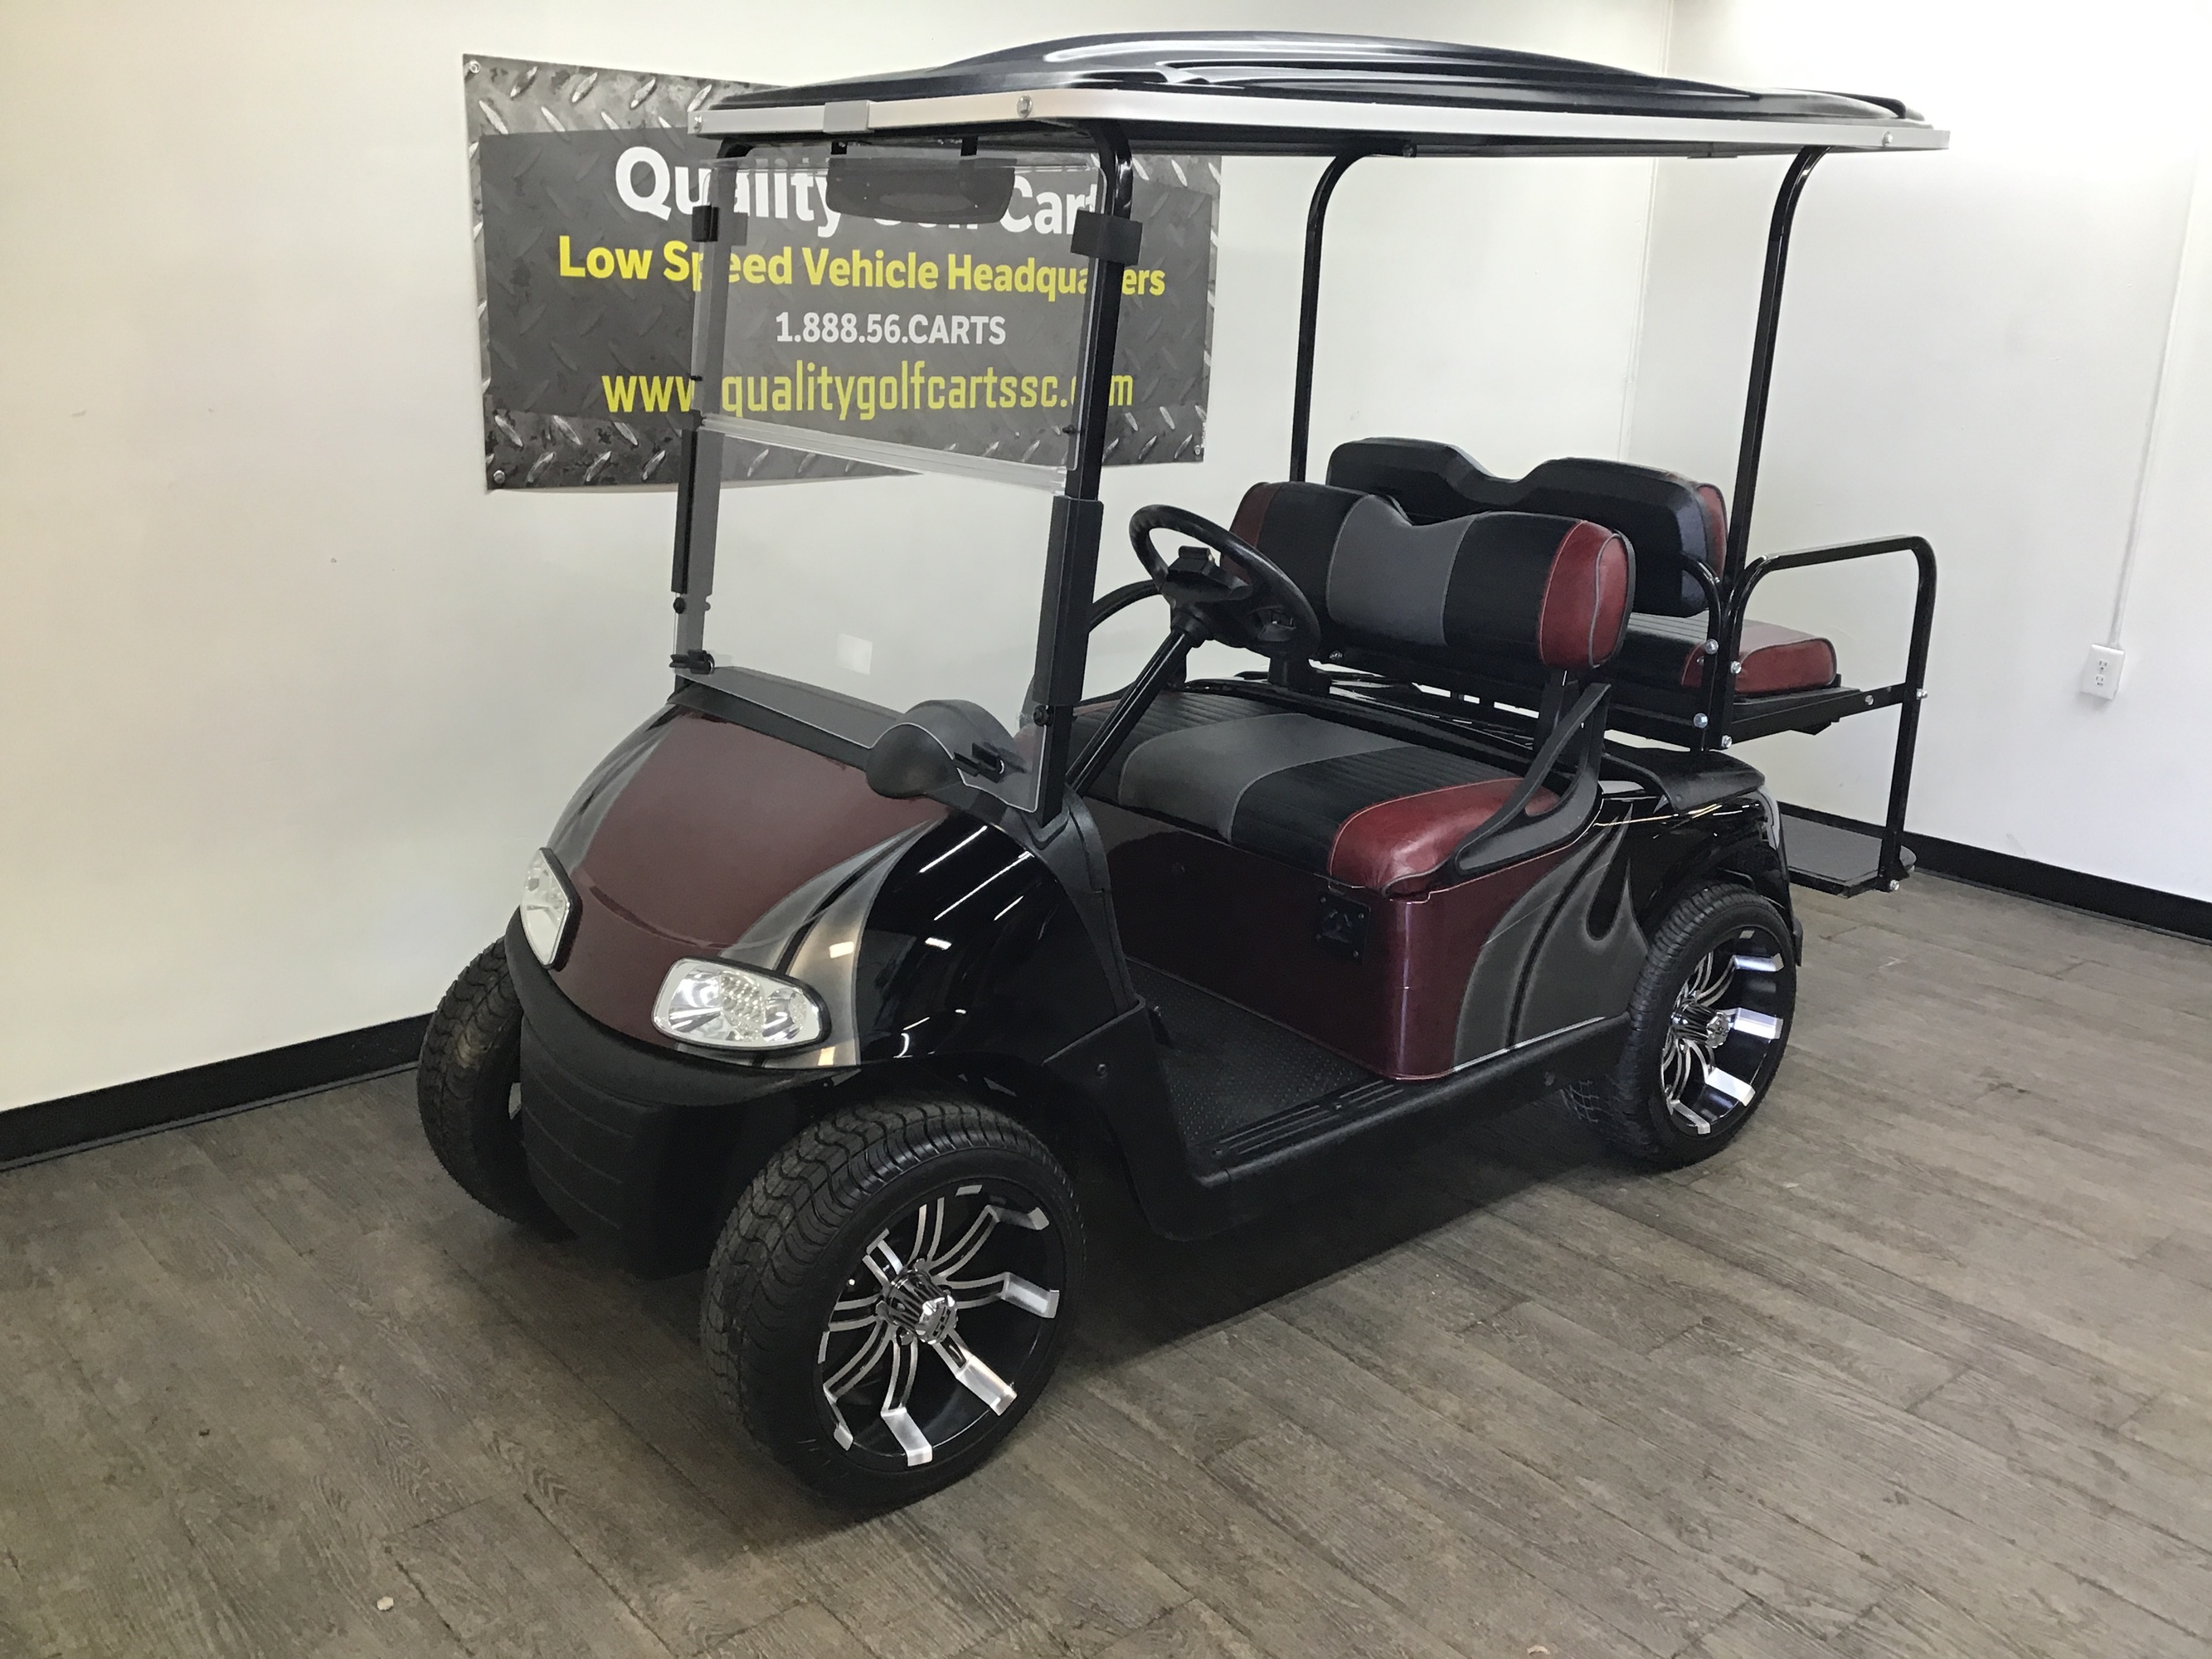 Custom - Quality Golf Carts, LLC